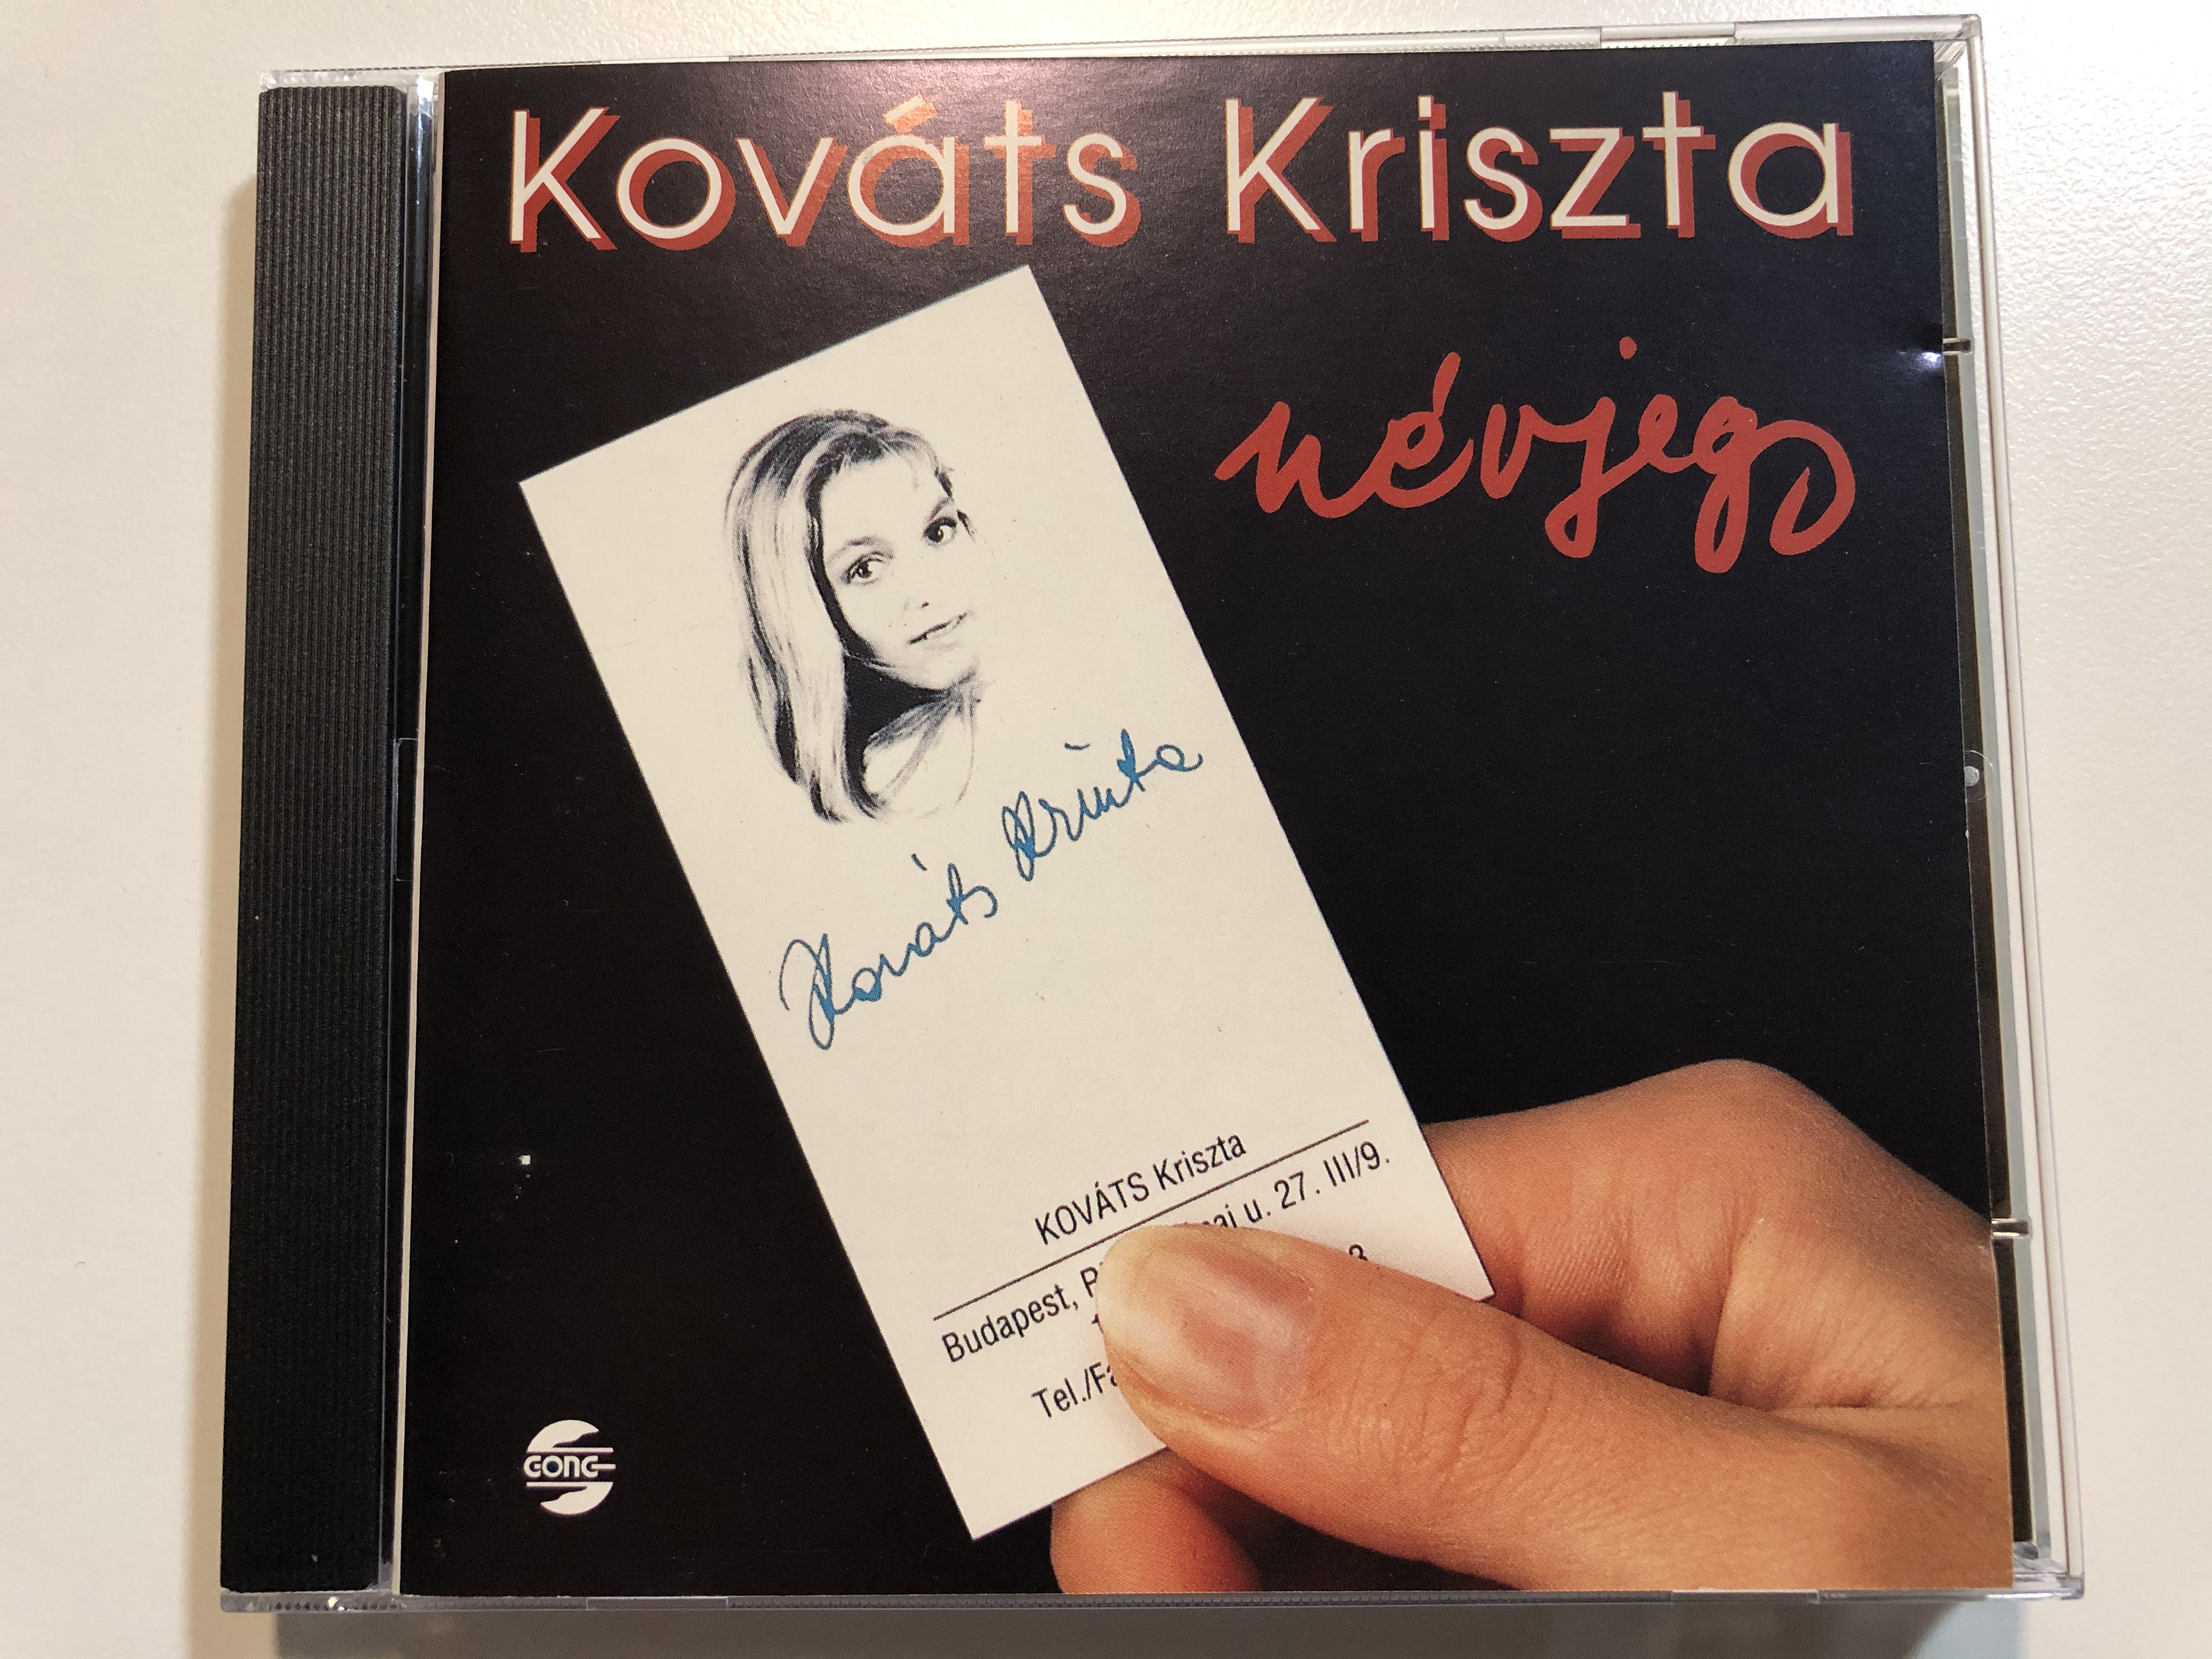 kov-ts-kriszta-n-vjegy-gong-audio-cd-1993-hcd-37726-1-.jpg